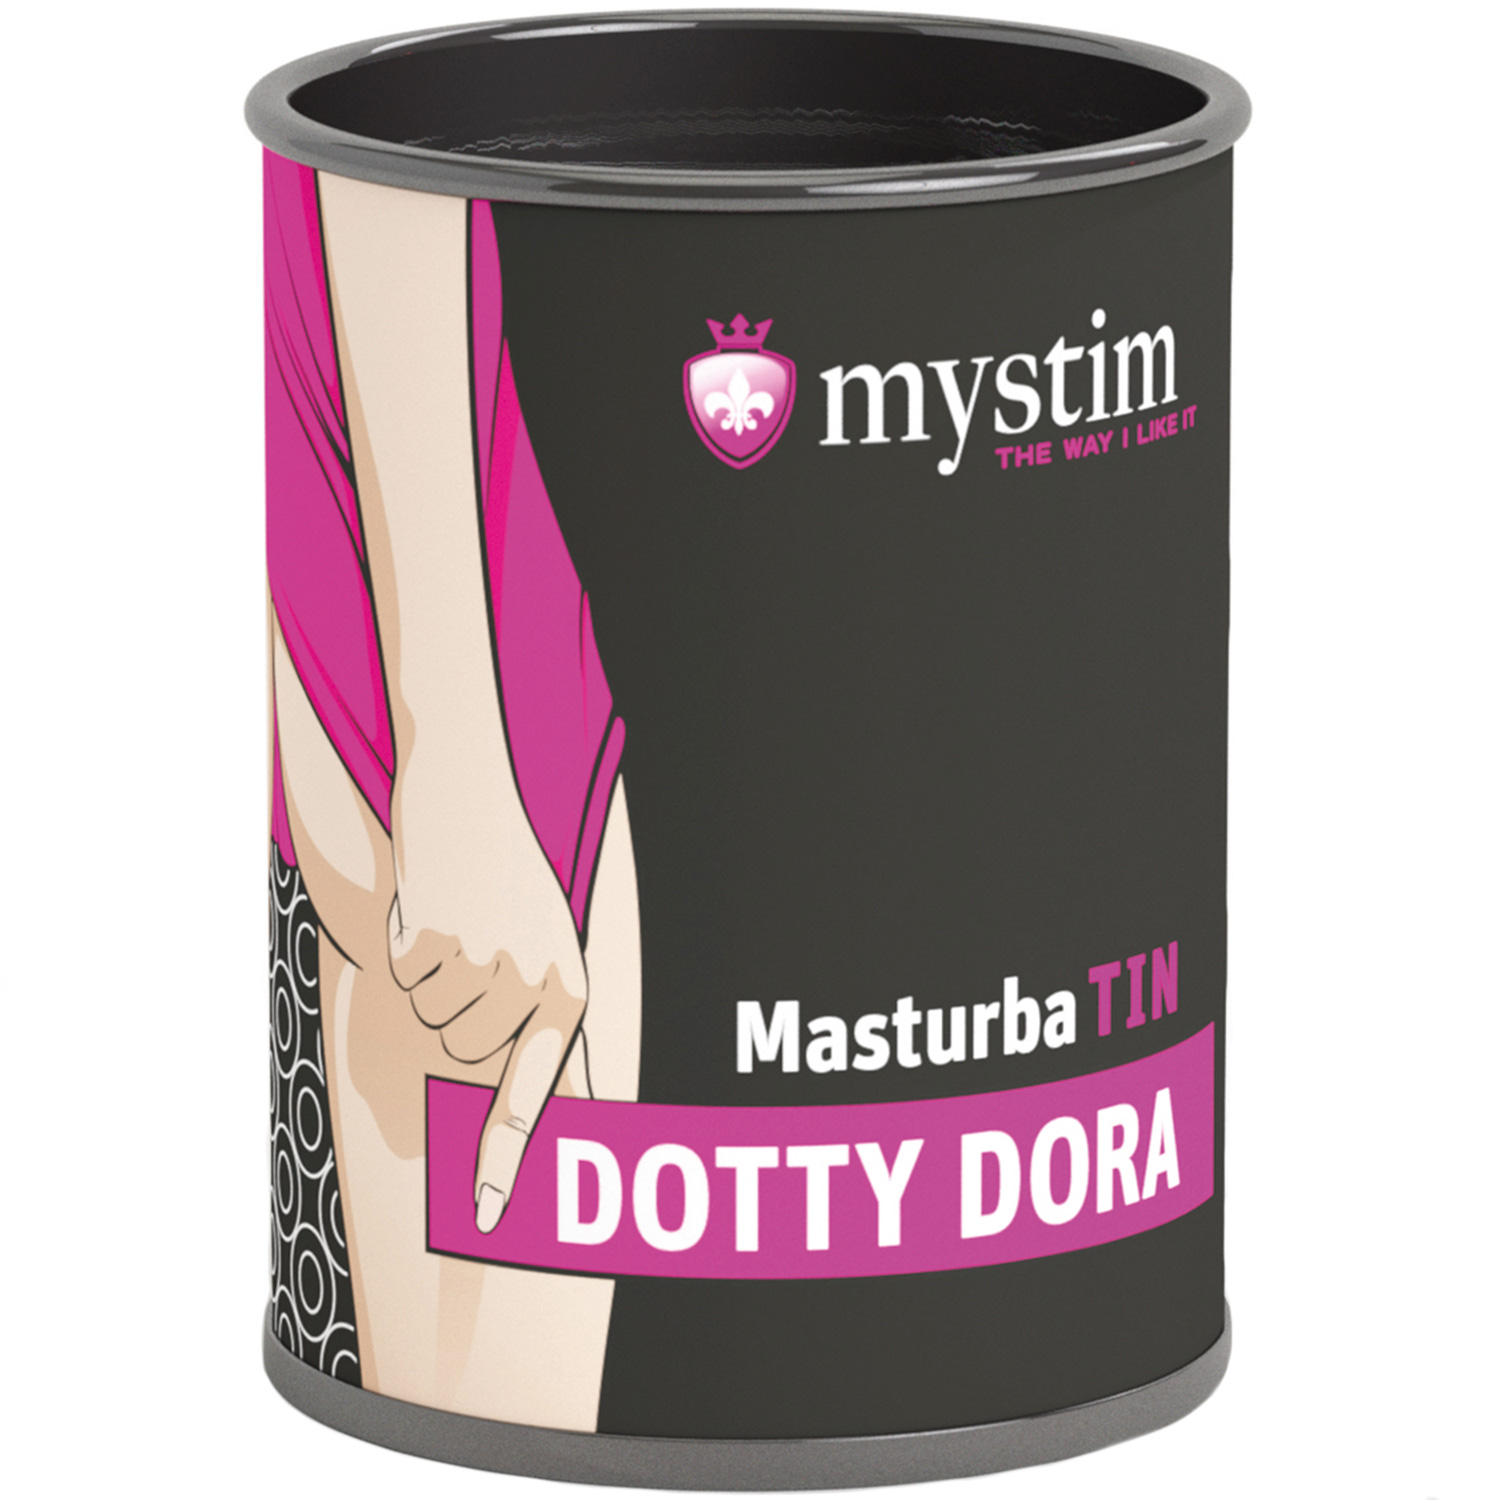 Mystim Dotty Dora MasturbaTIN - Hvid thumbnail